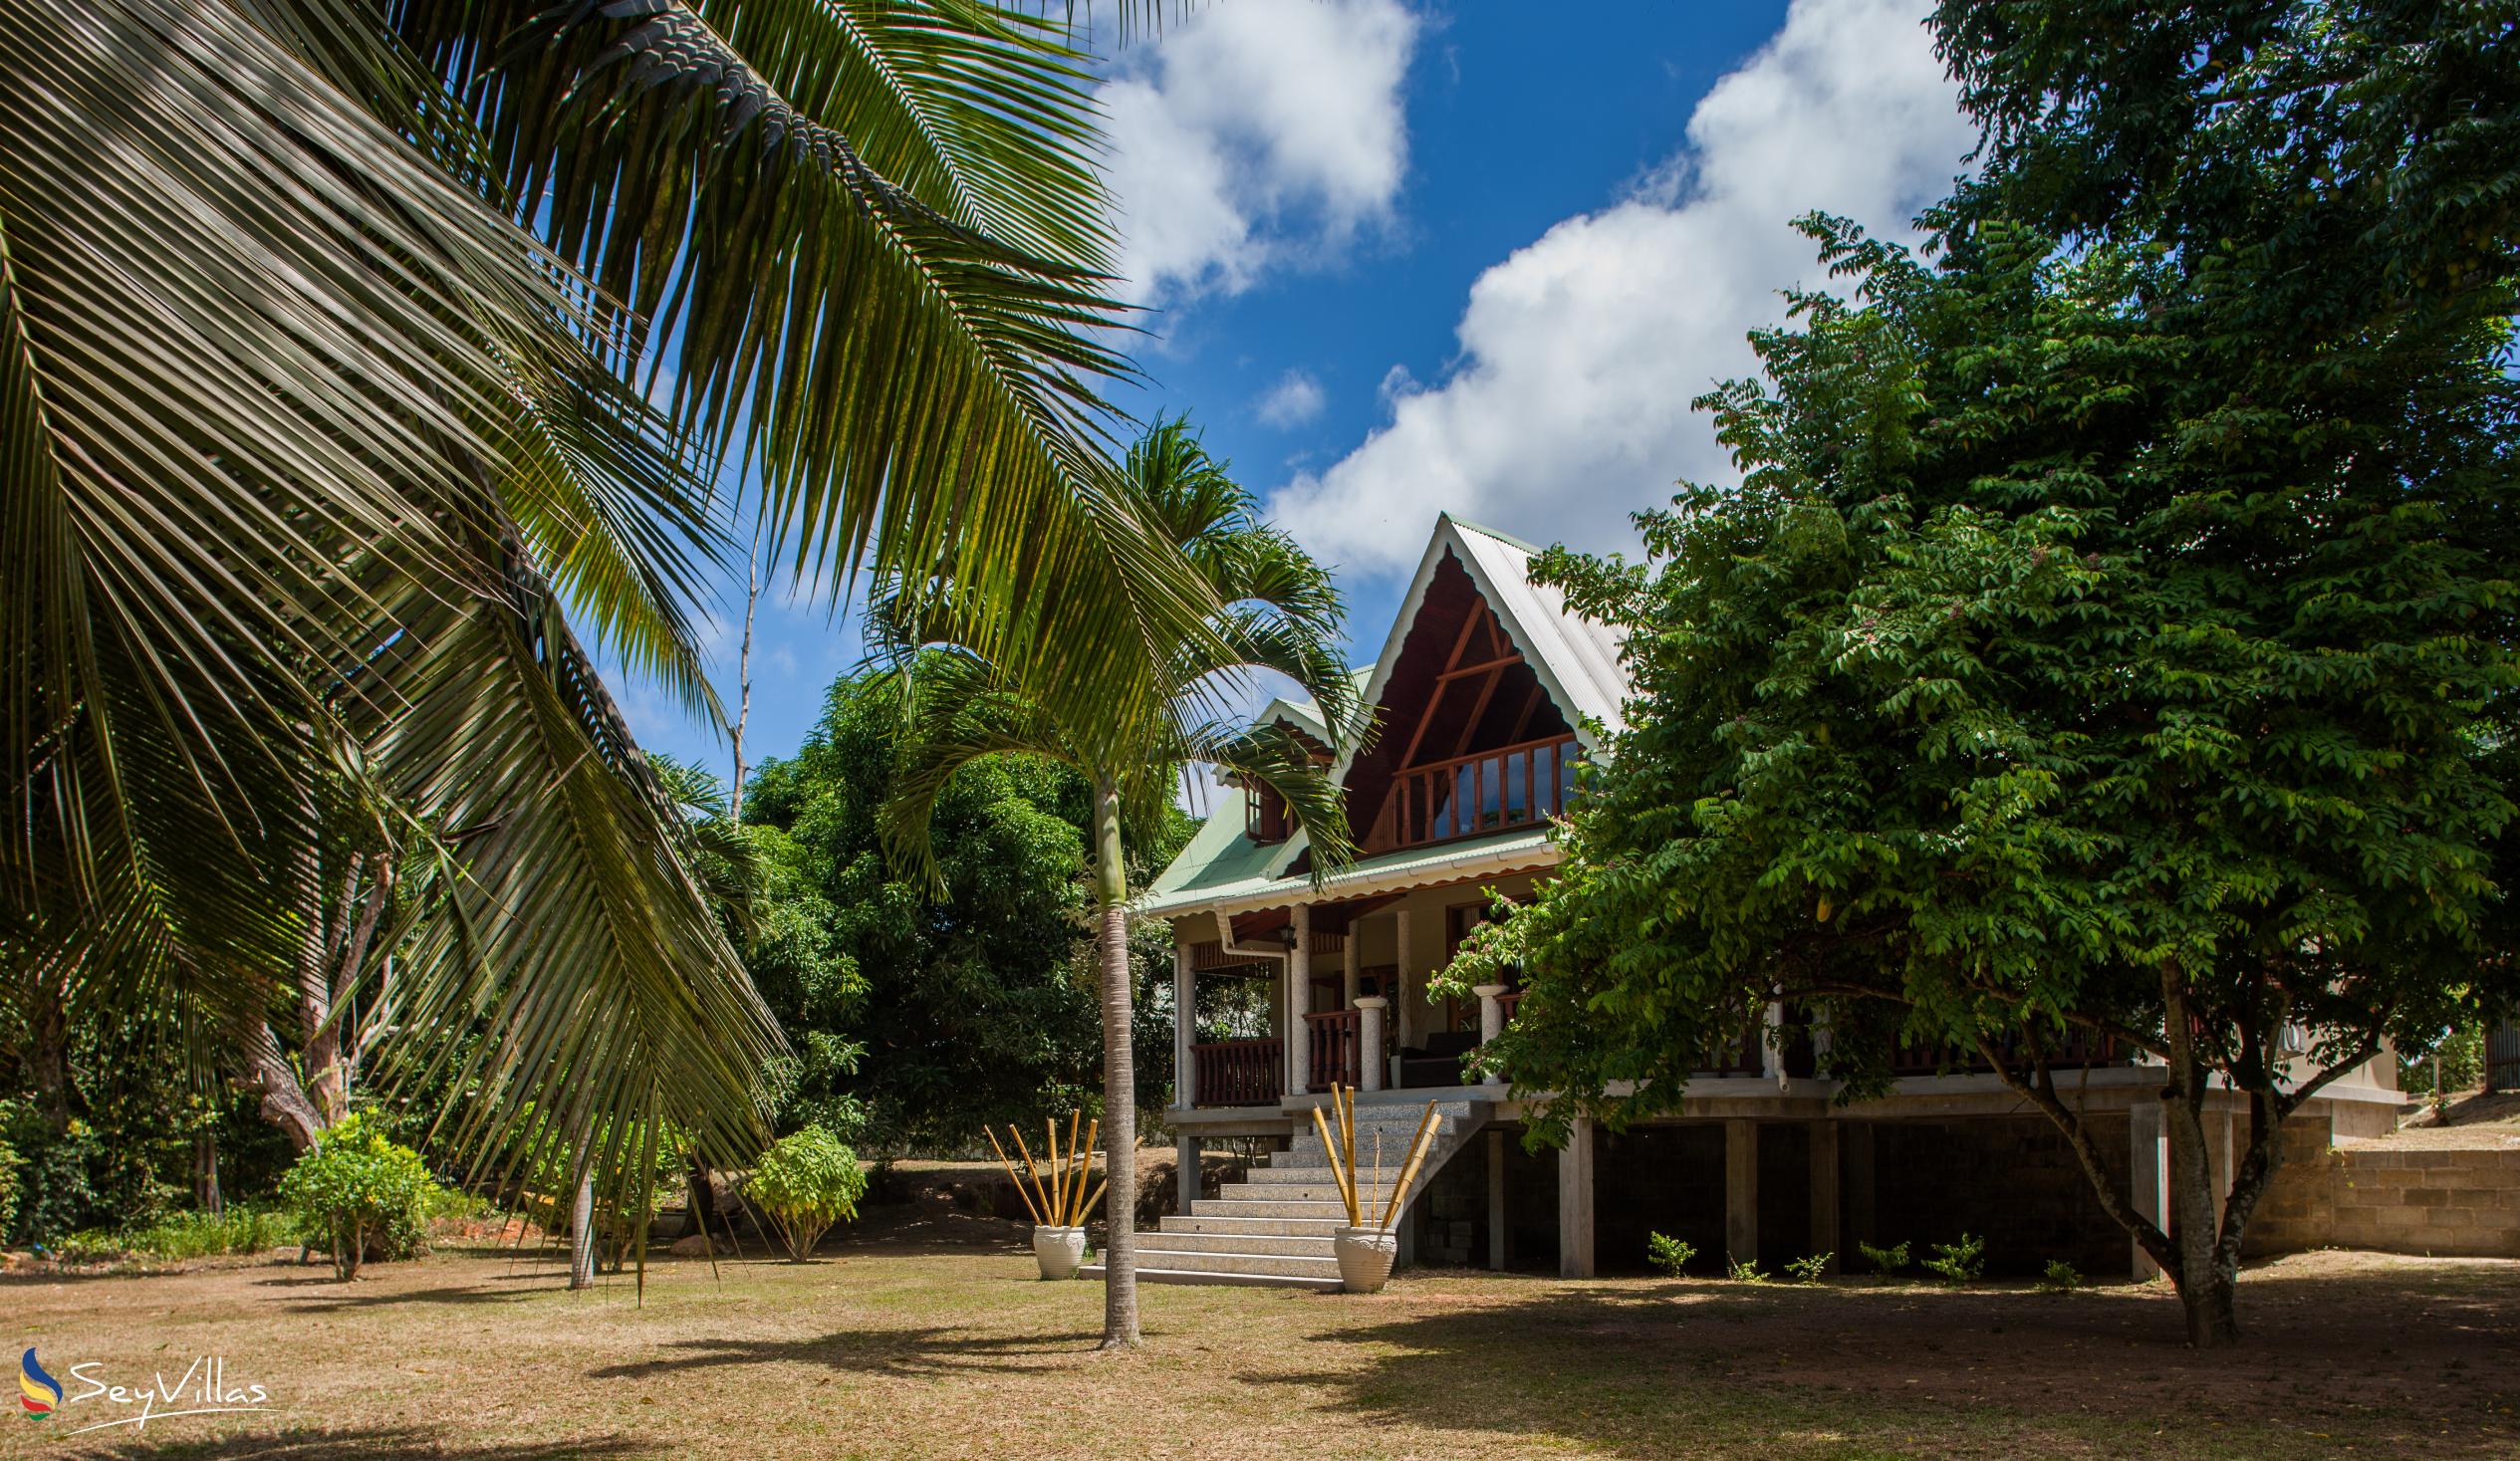 Foto 5: Villa Pasyon - Aussenbereich - La Digue (Seychellen)